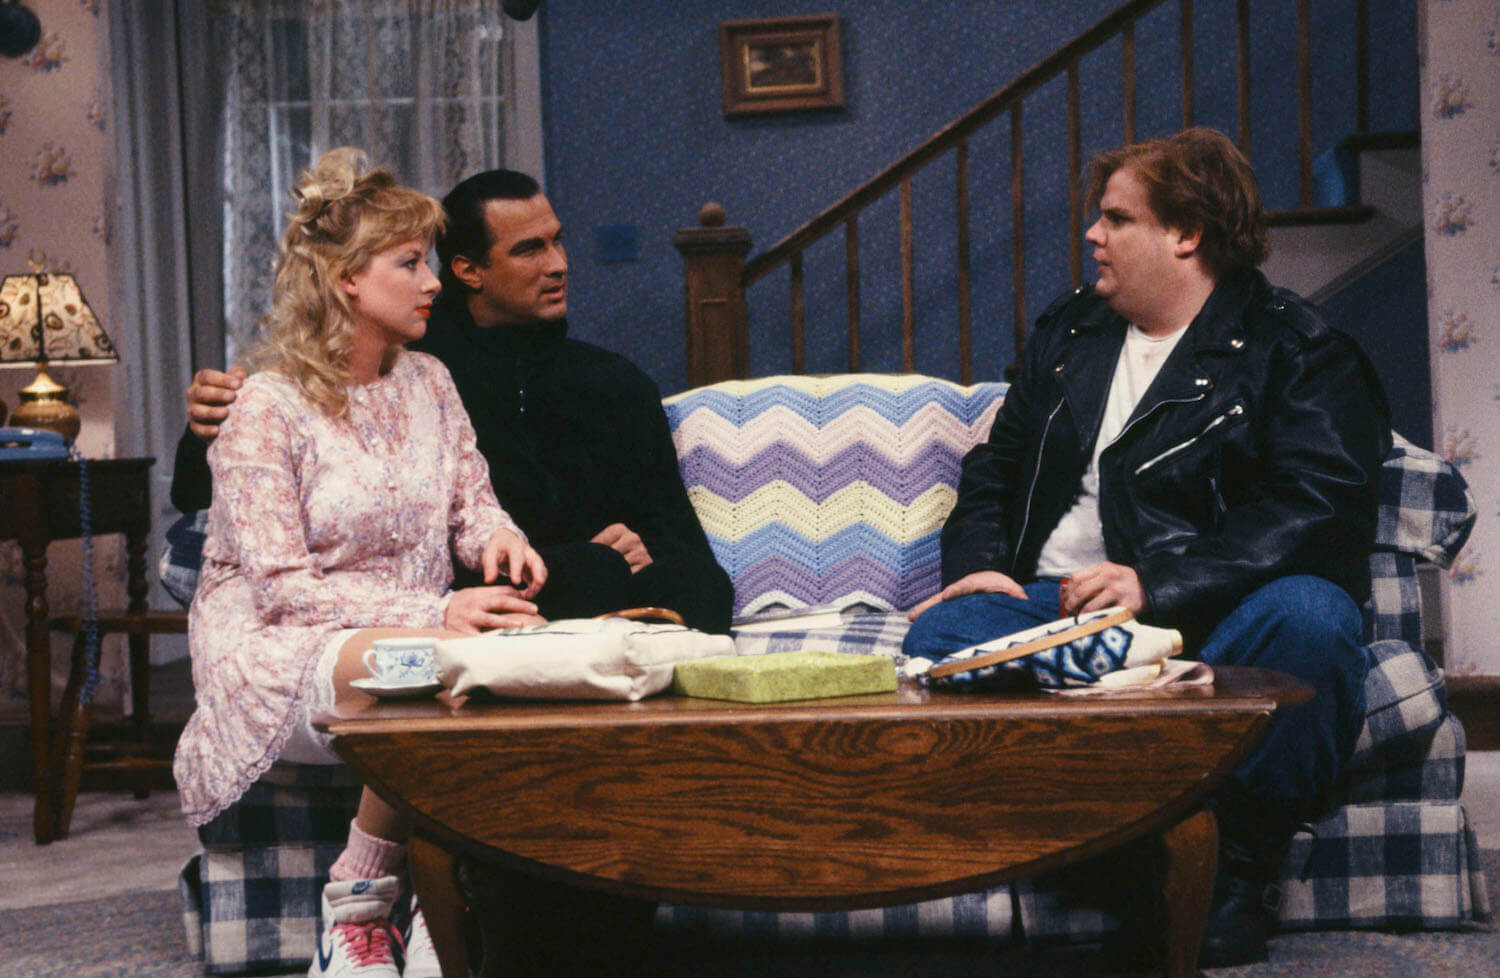 Victoria Jackson as Jennifer, Steven Seagal as Mr. Novack, Chris Farley as Doug in 'Saturday Night Live' in 1991